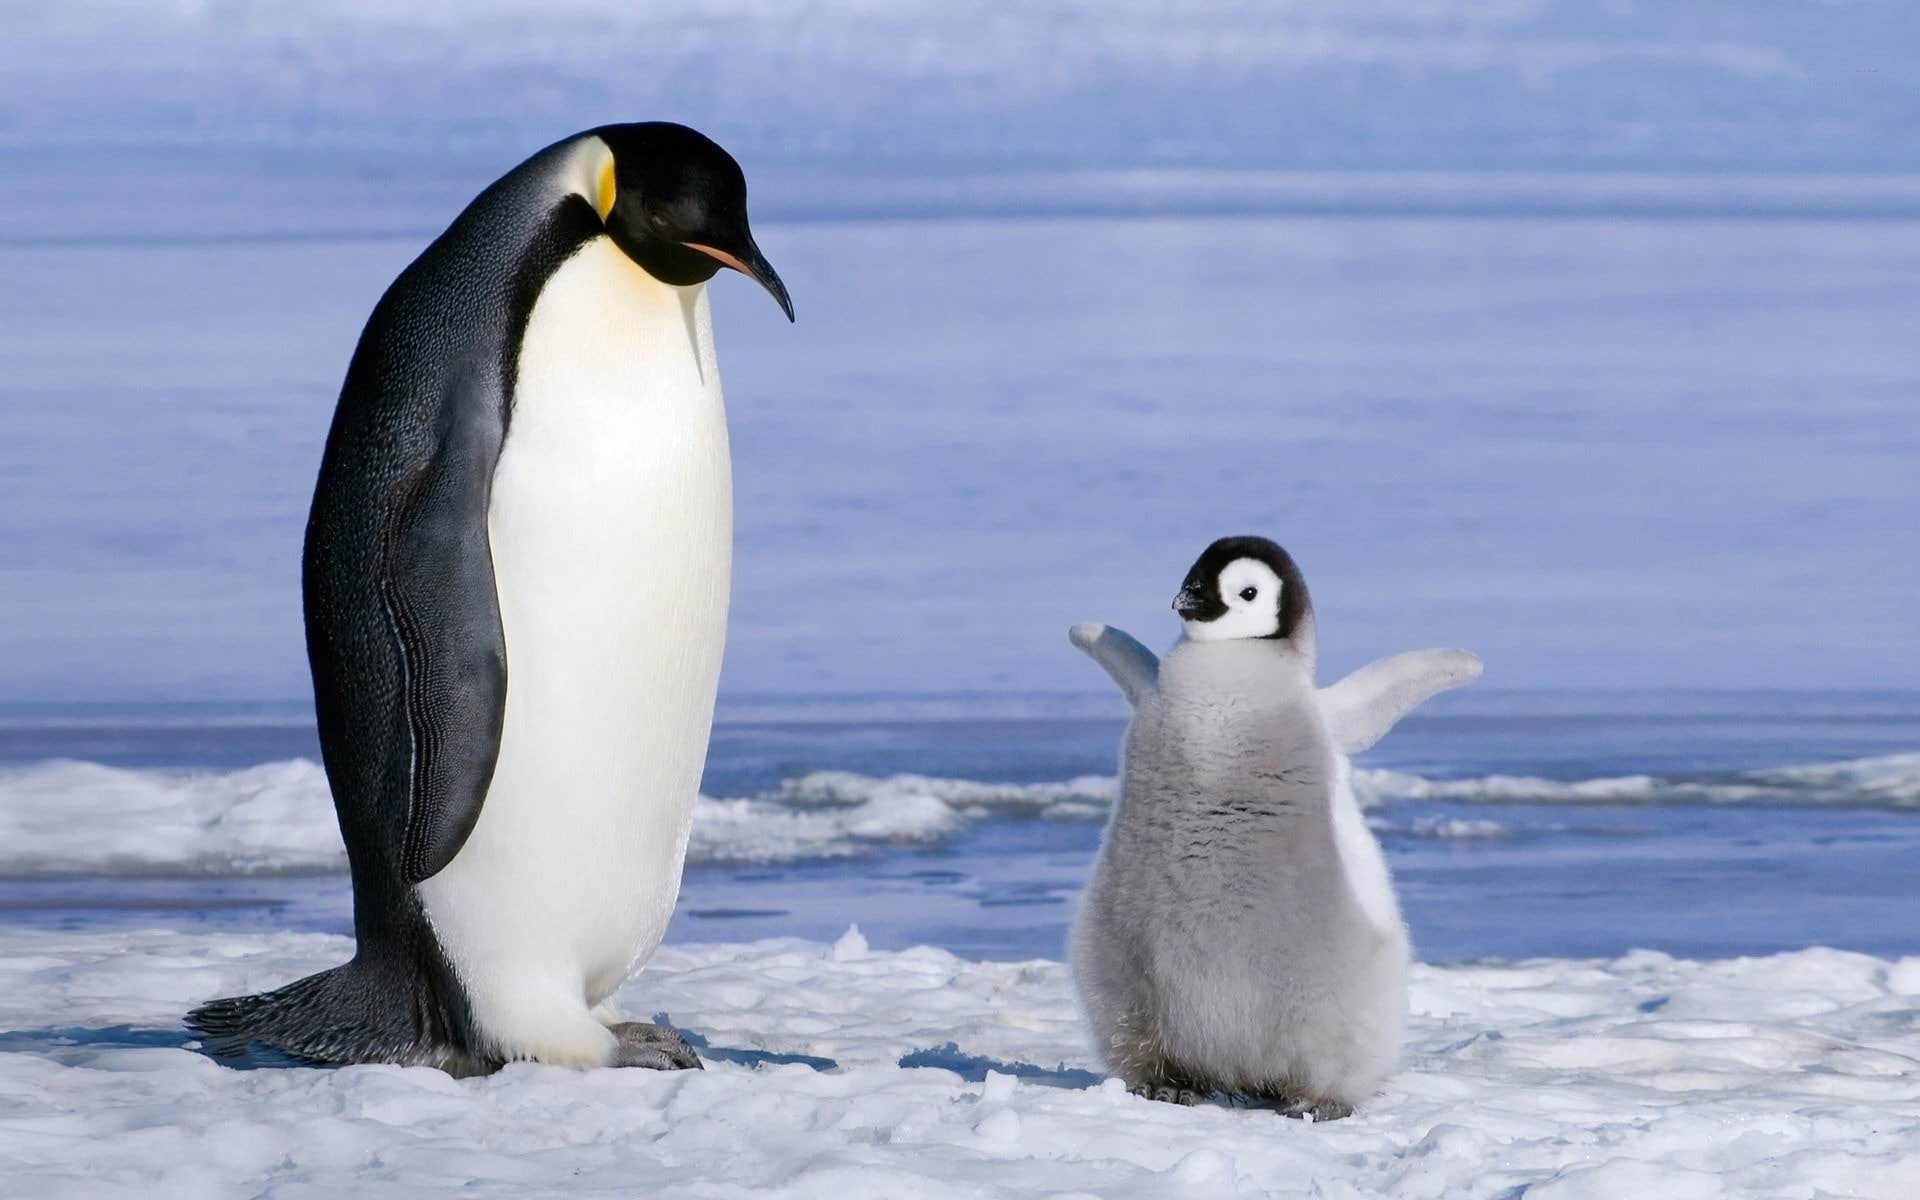 penguin-ecological animal desktop wallpapers, two white and black penguins